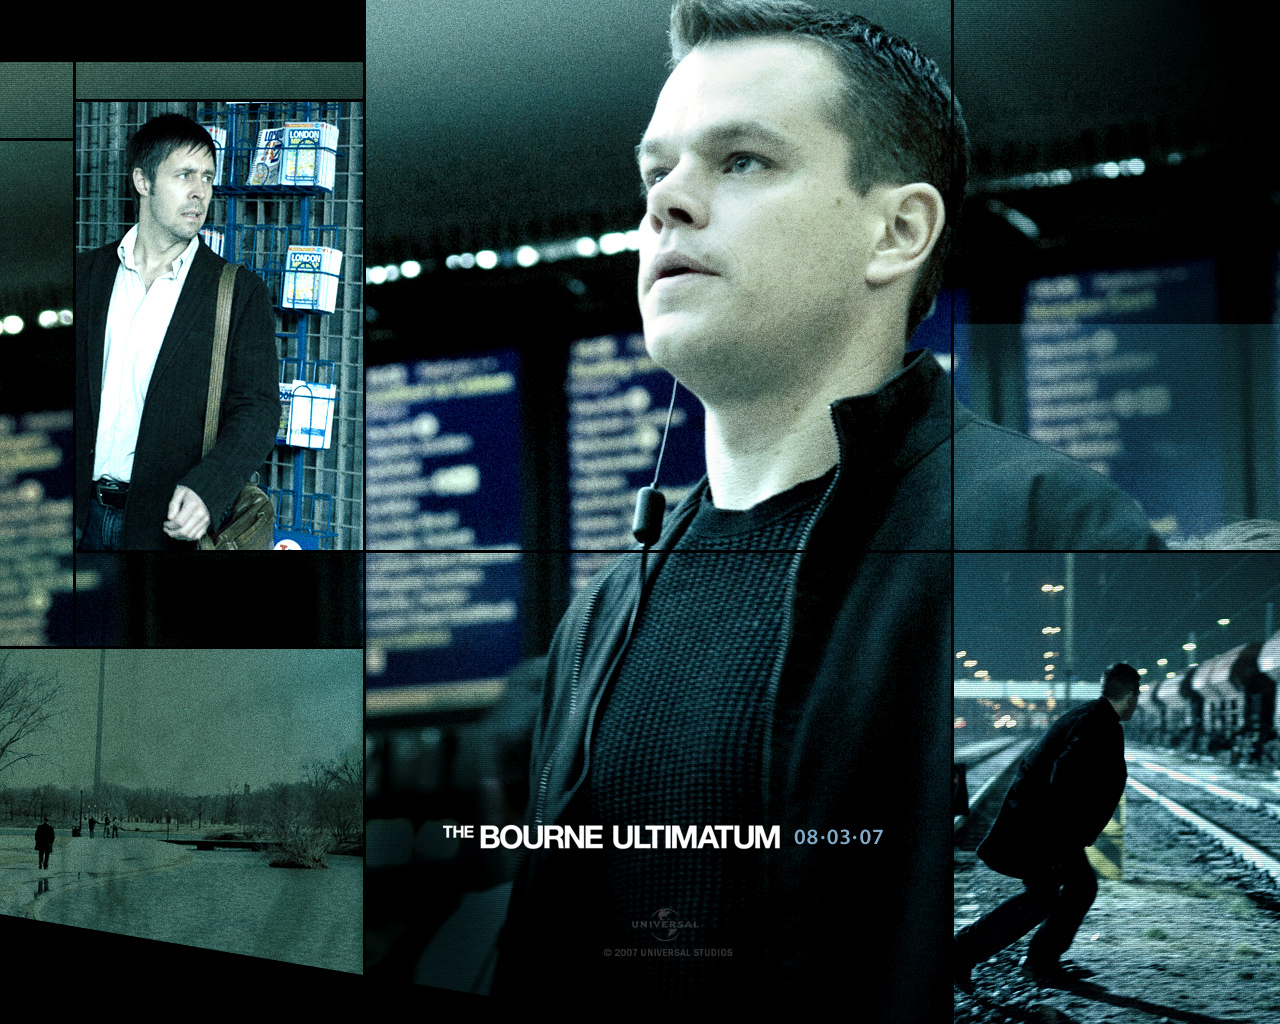 Jason Bourne Image HD Wallpaper And Background